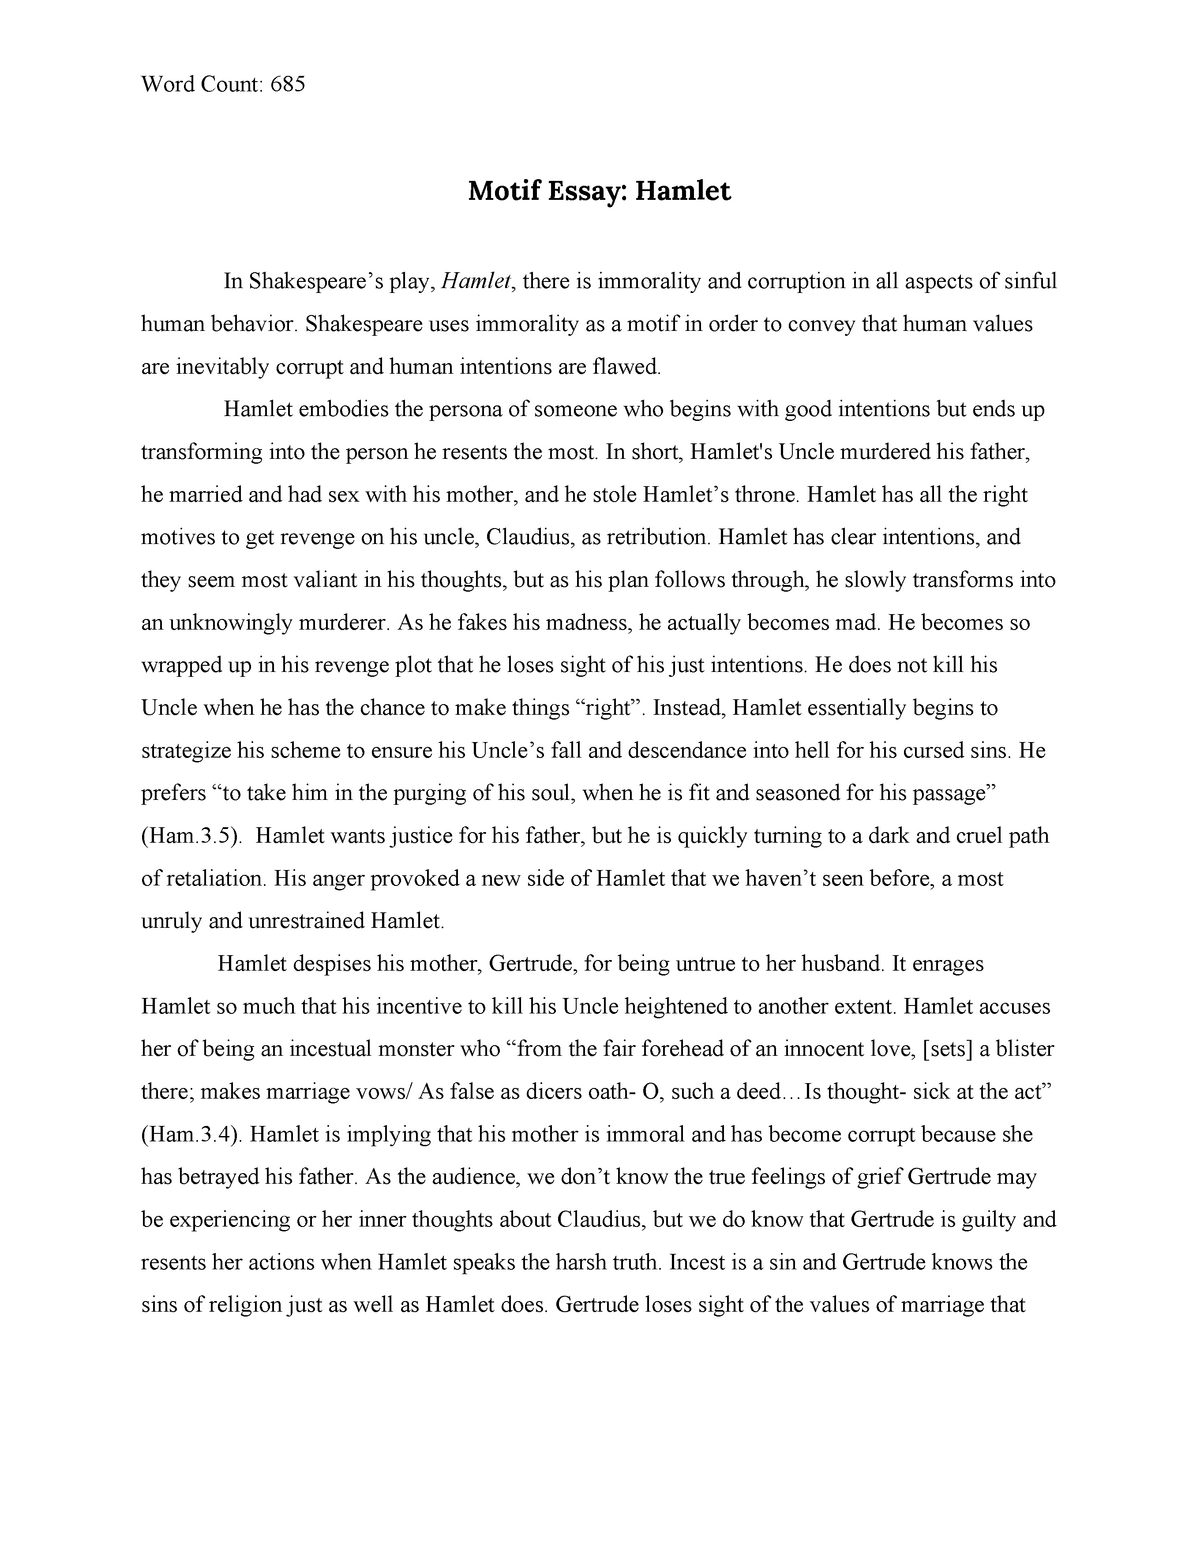 hamlet essay introduction